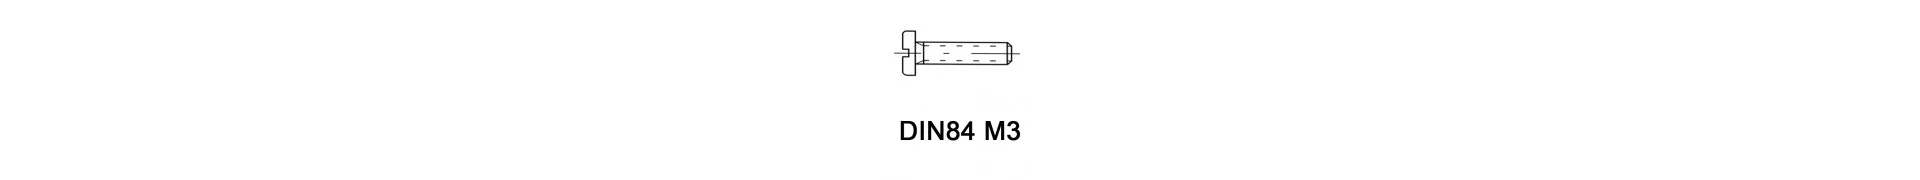 DIN84 M3